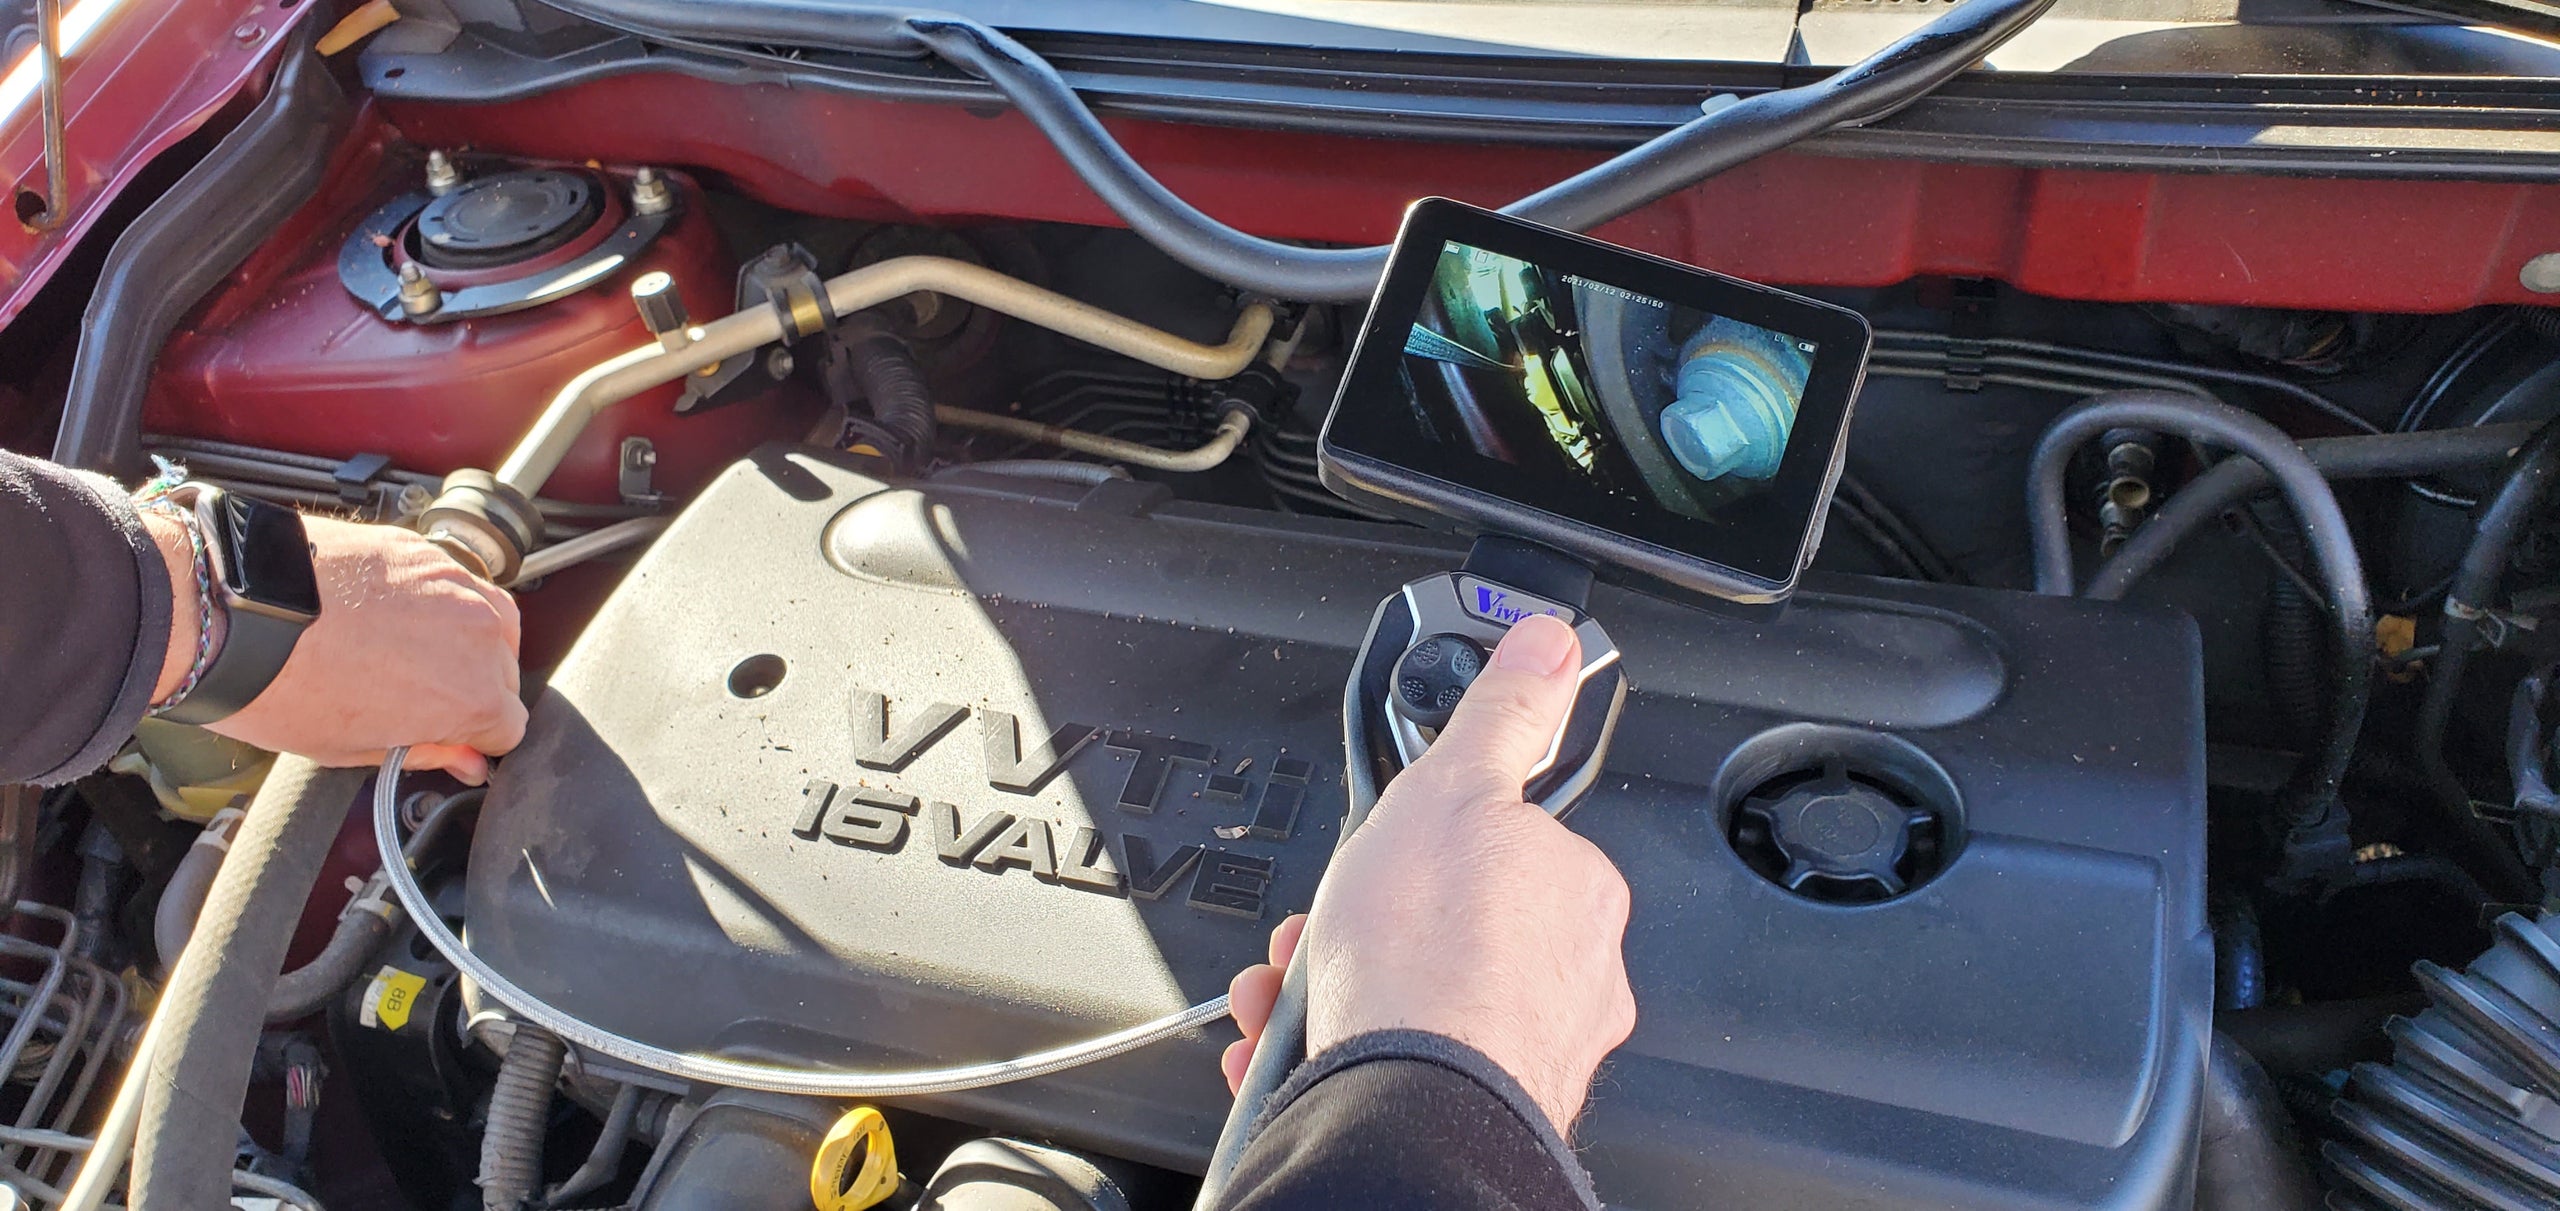 Vividia CX-4010i Flexible Smartphone Joystick Articulating Inspection –  Inspection Scopes